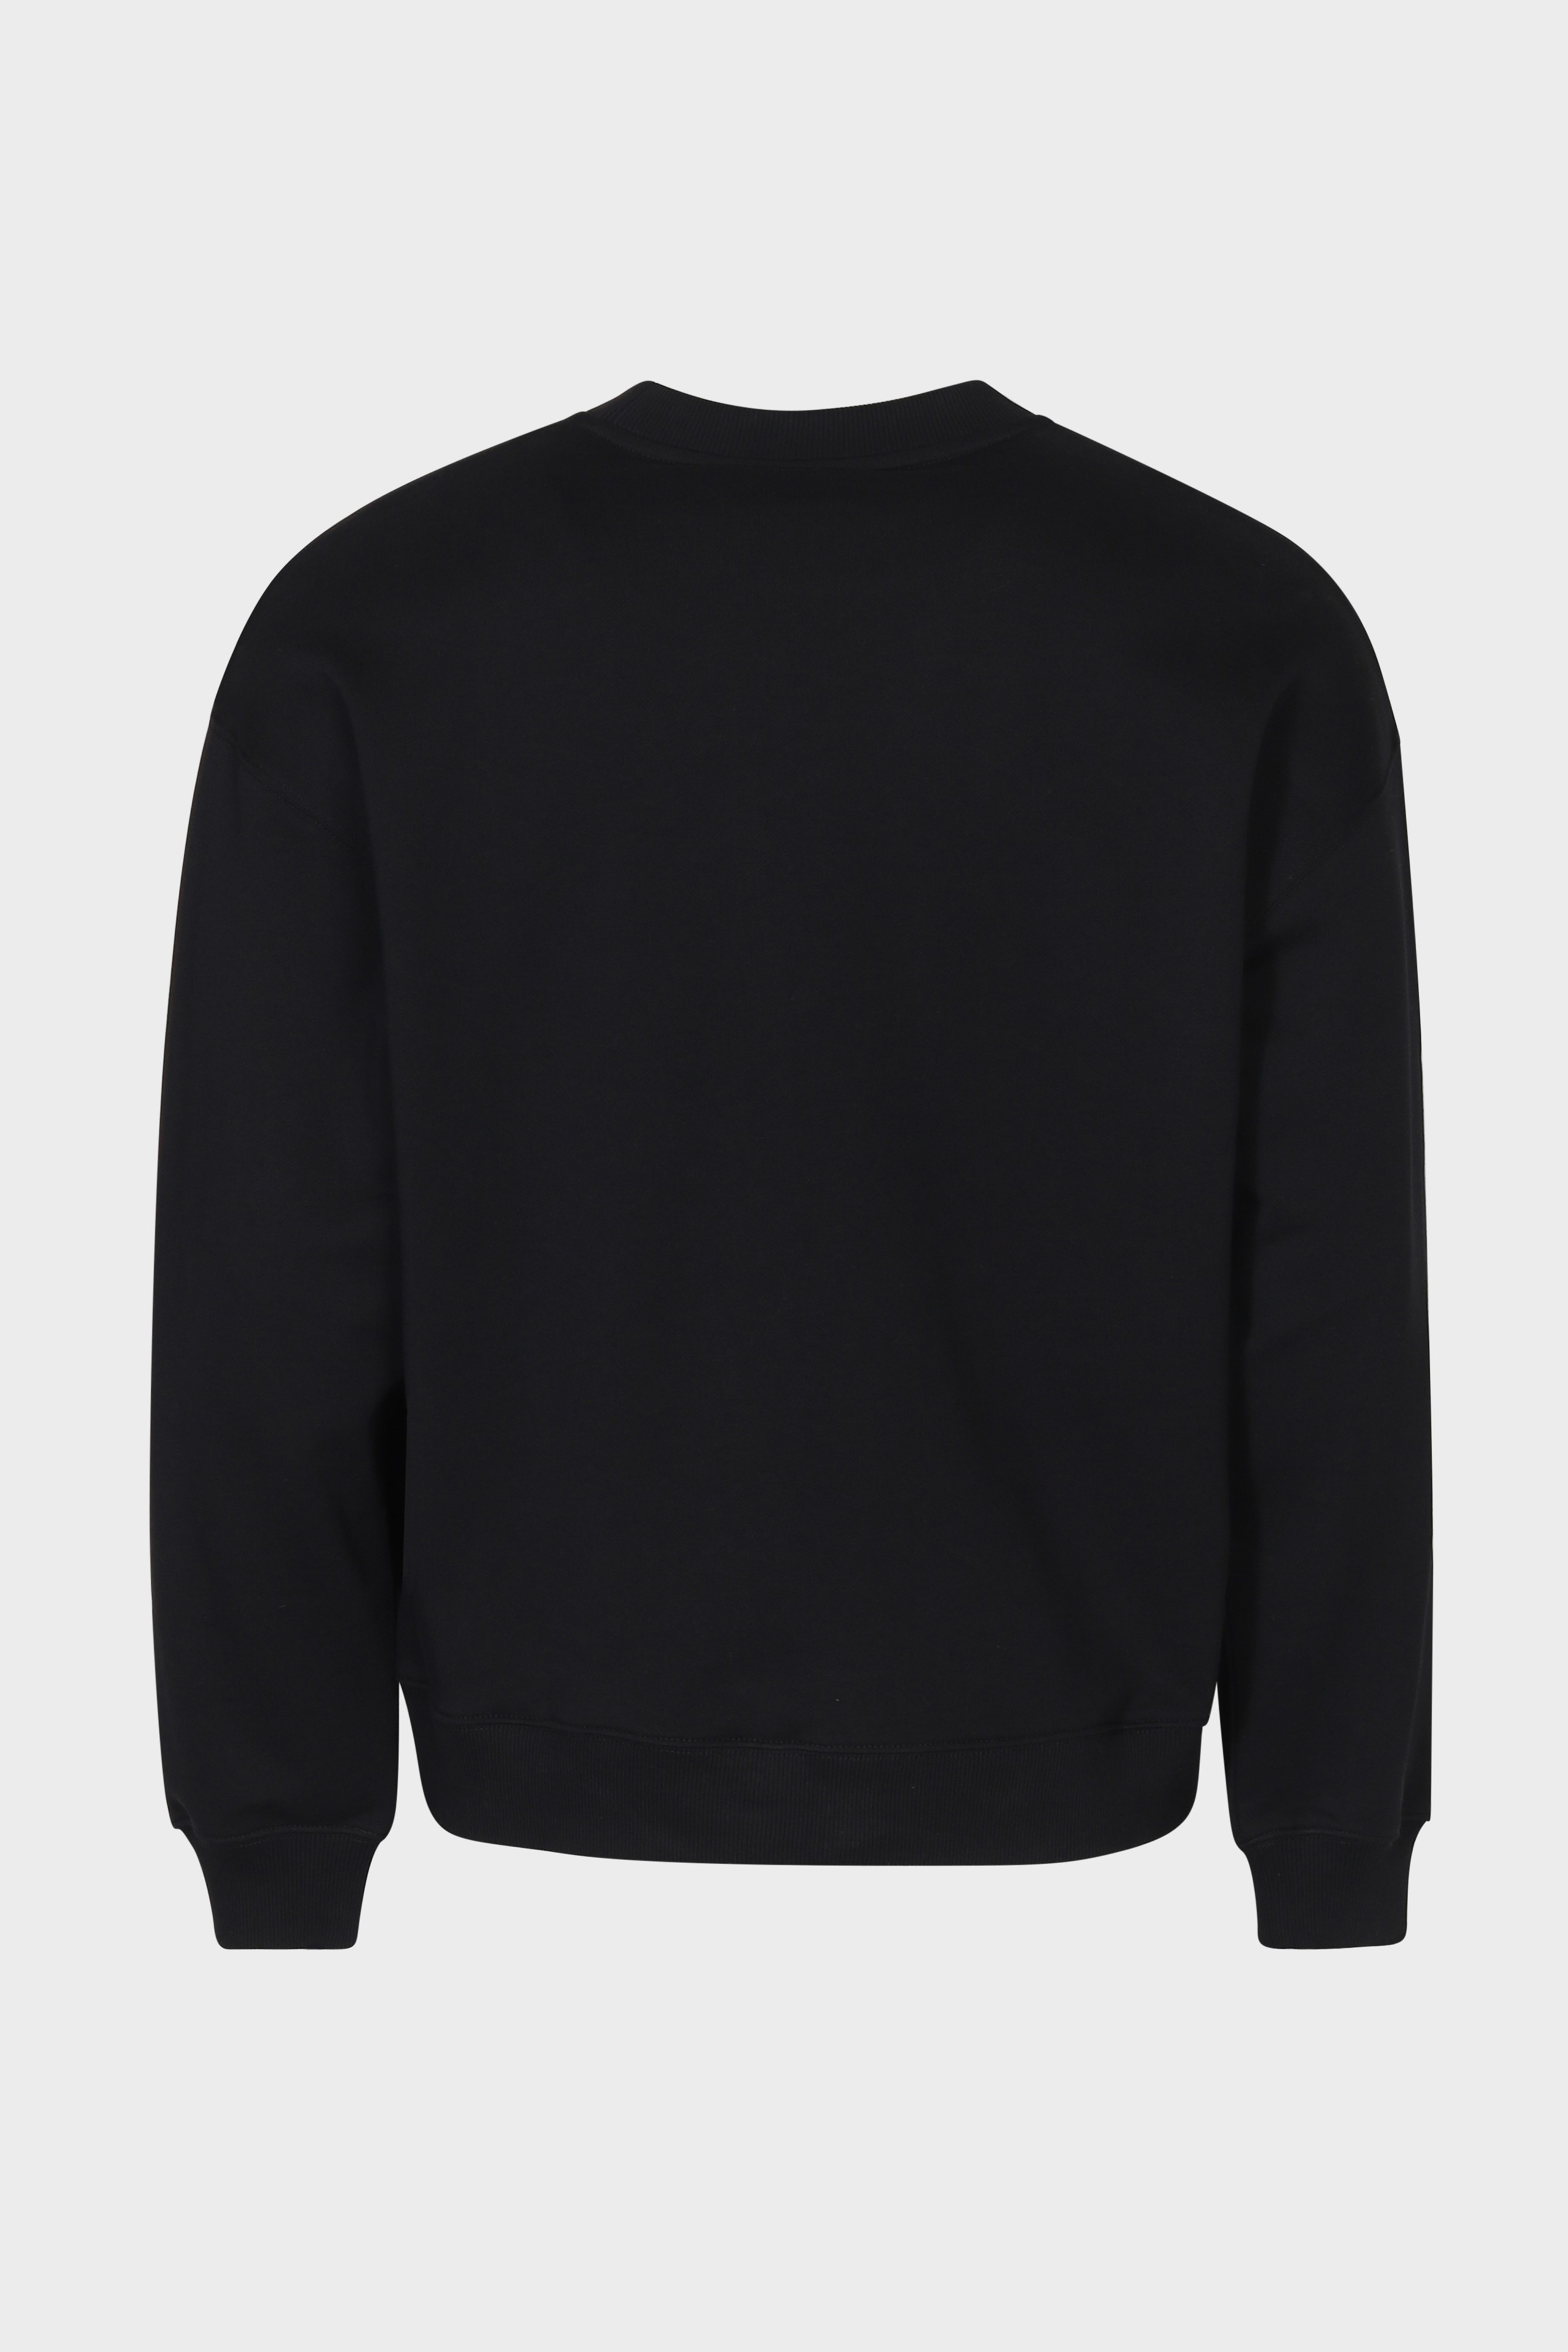 AXEL ARIGATO Spade Sweatshirt in Black L